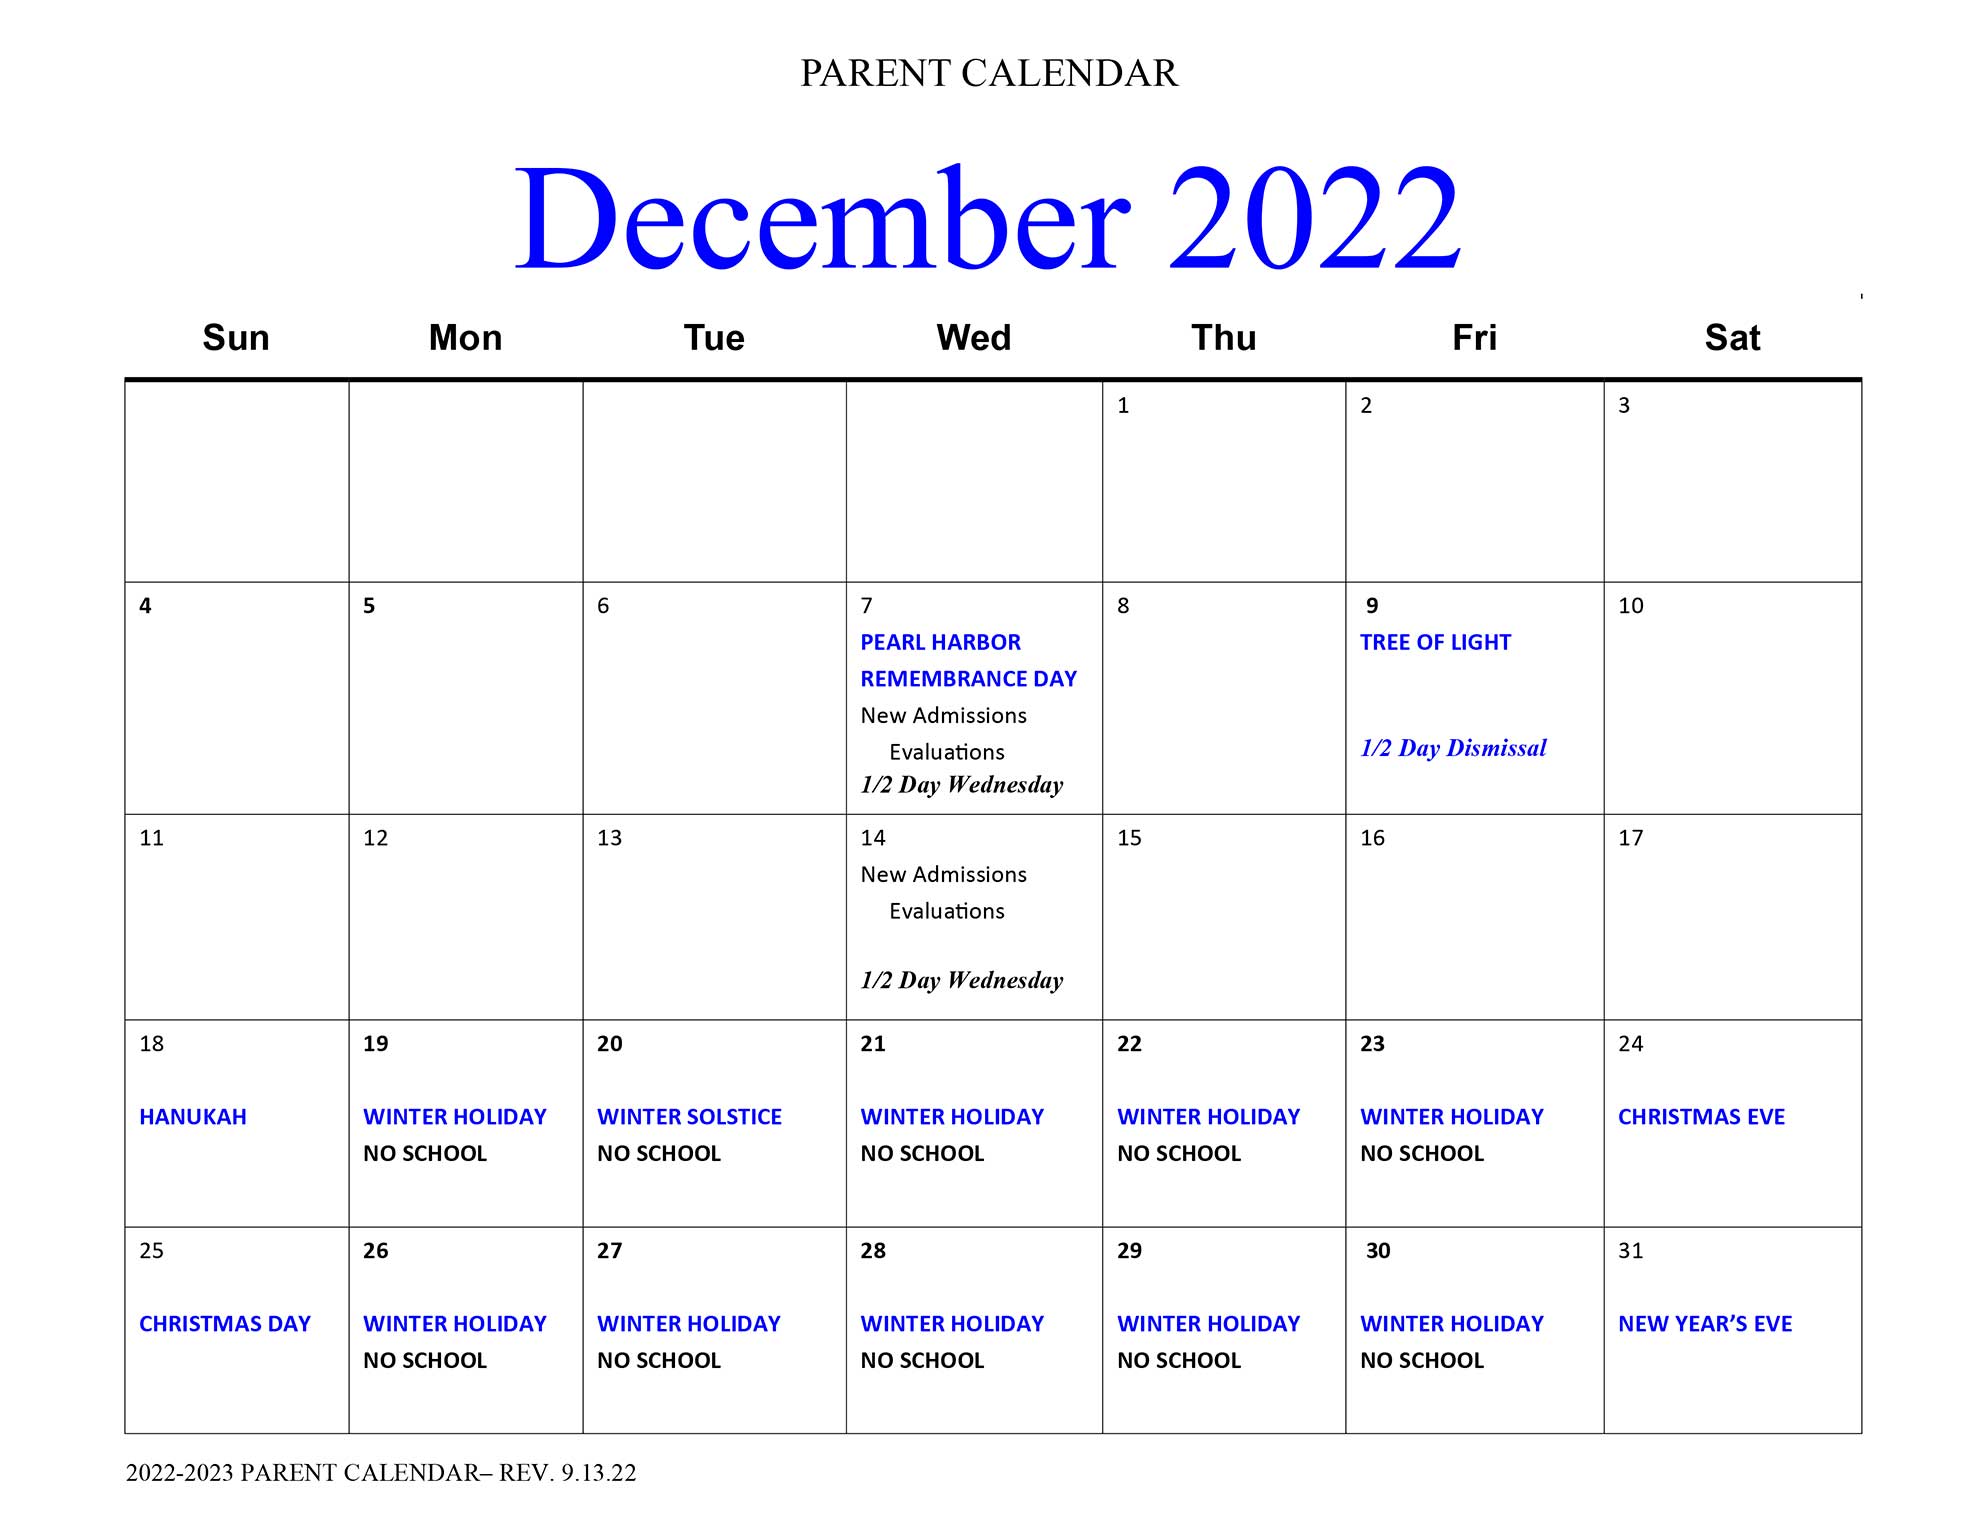 The Lewis School December 2022 Parent Calendar